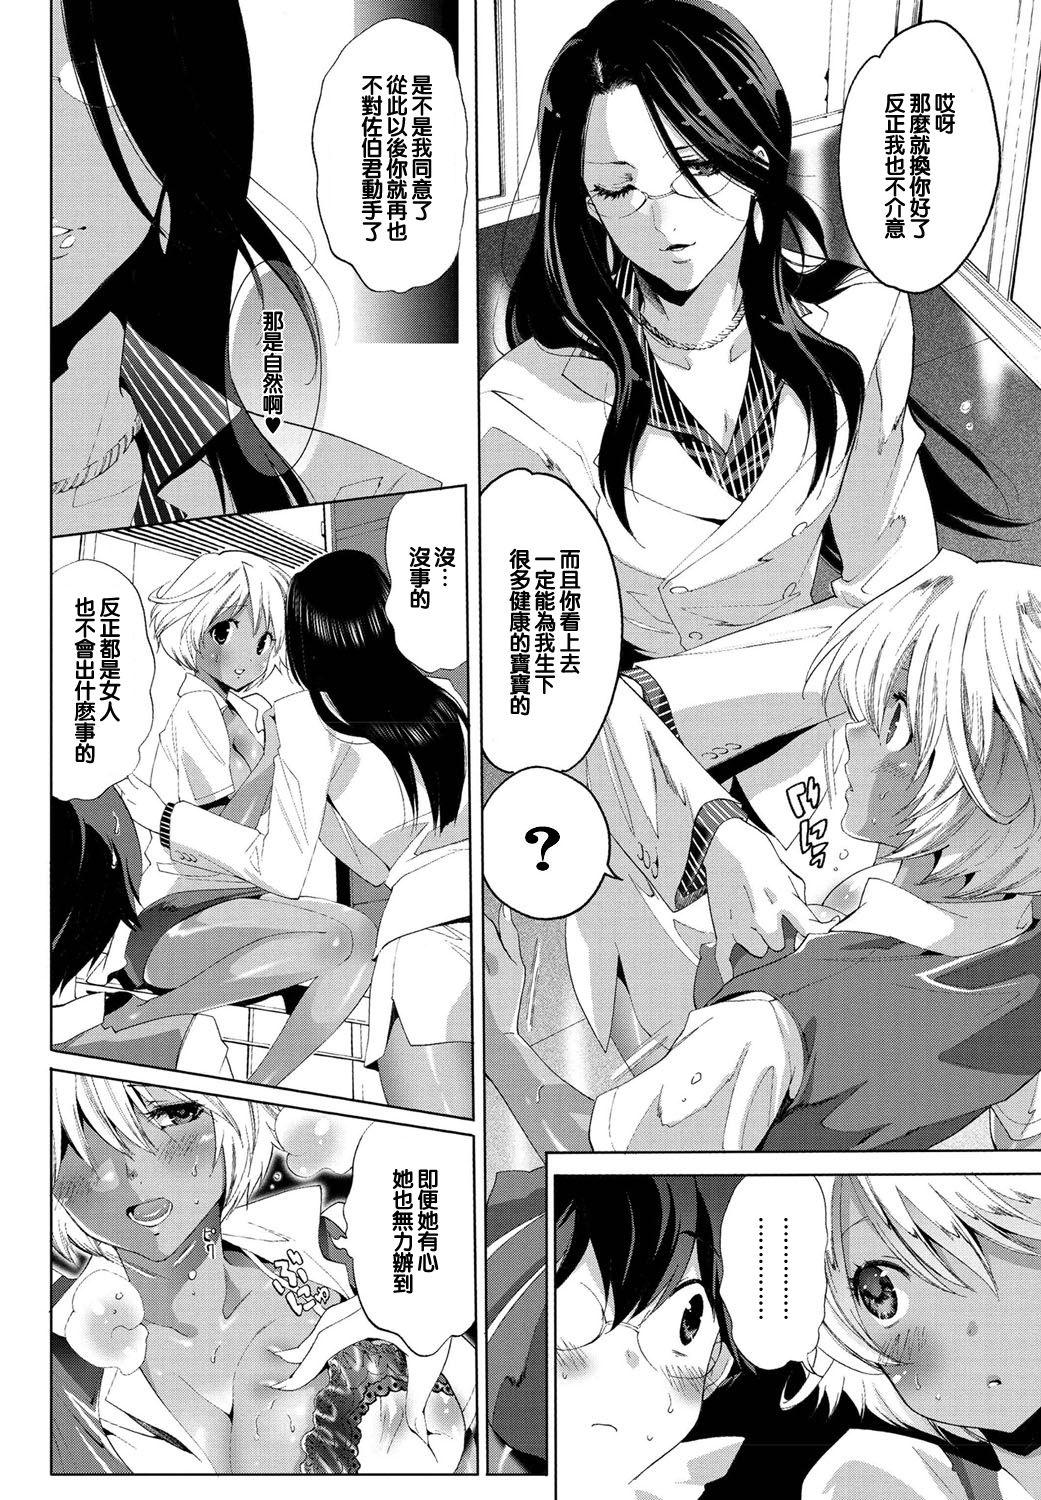 Nylons Tatakau no da Otome Sexo Anal - Page 6